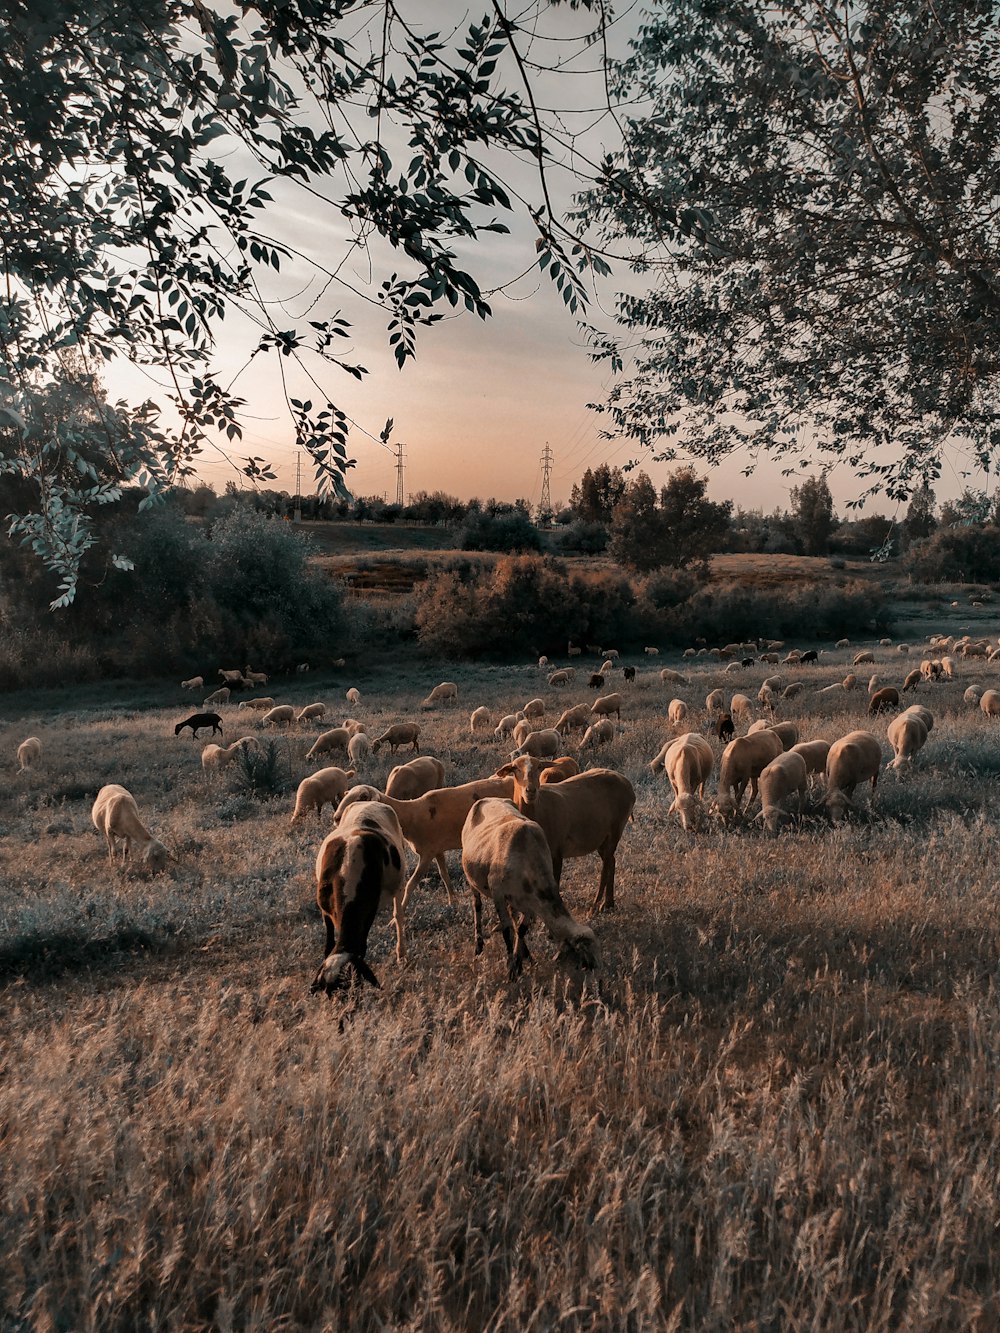 a herd of sheep grazing on a dry grass field